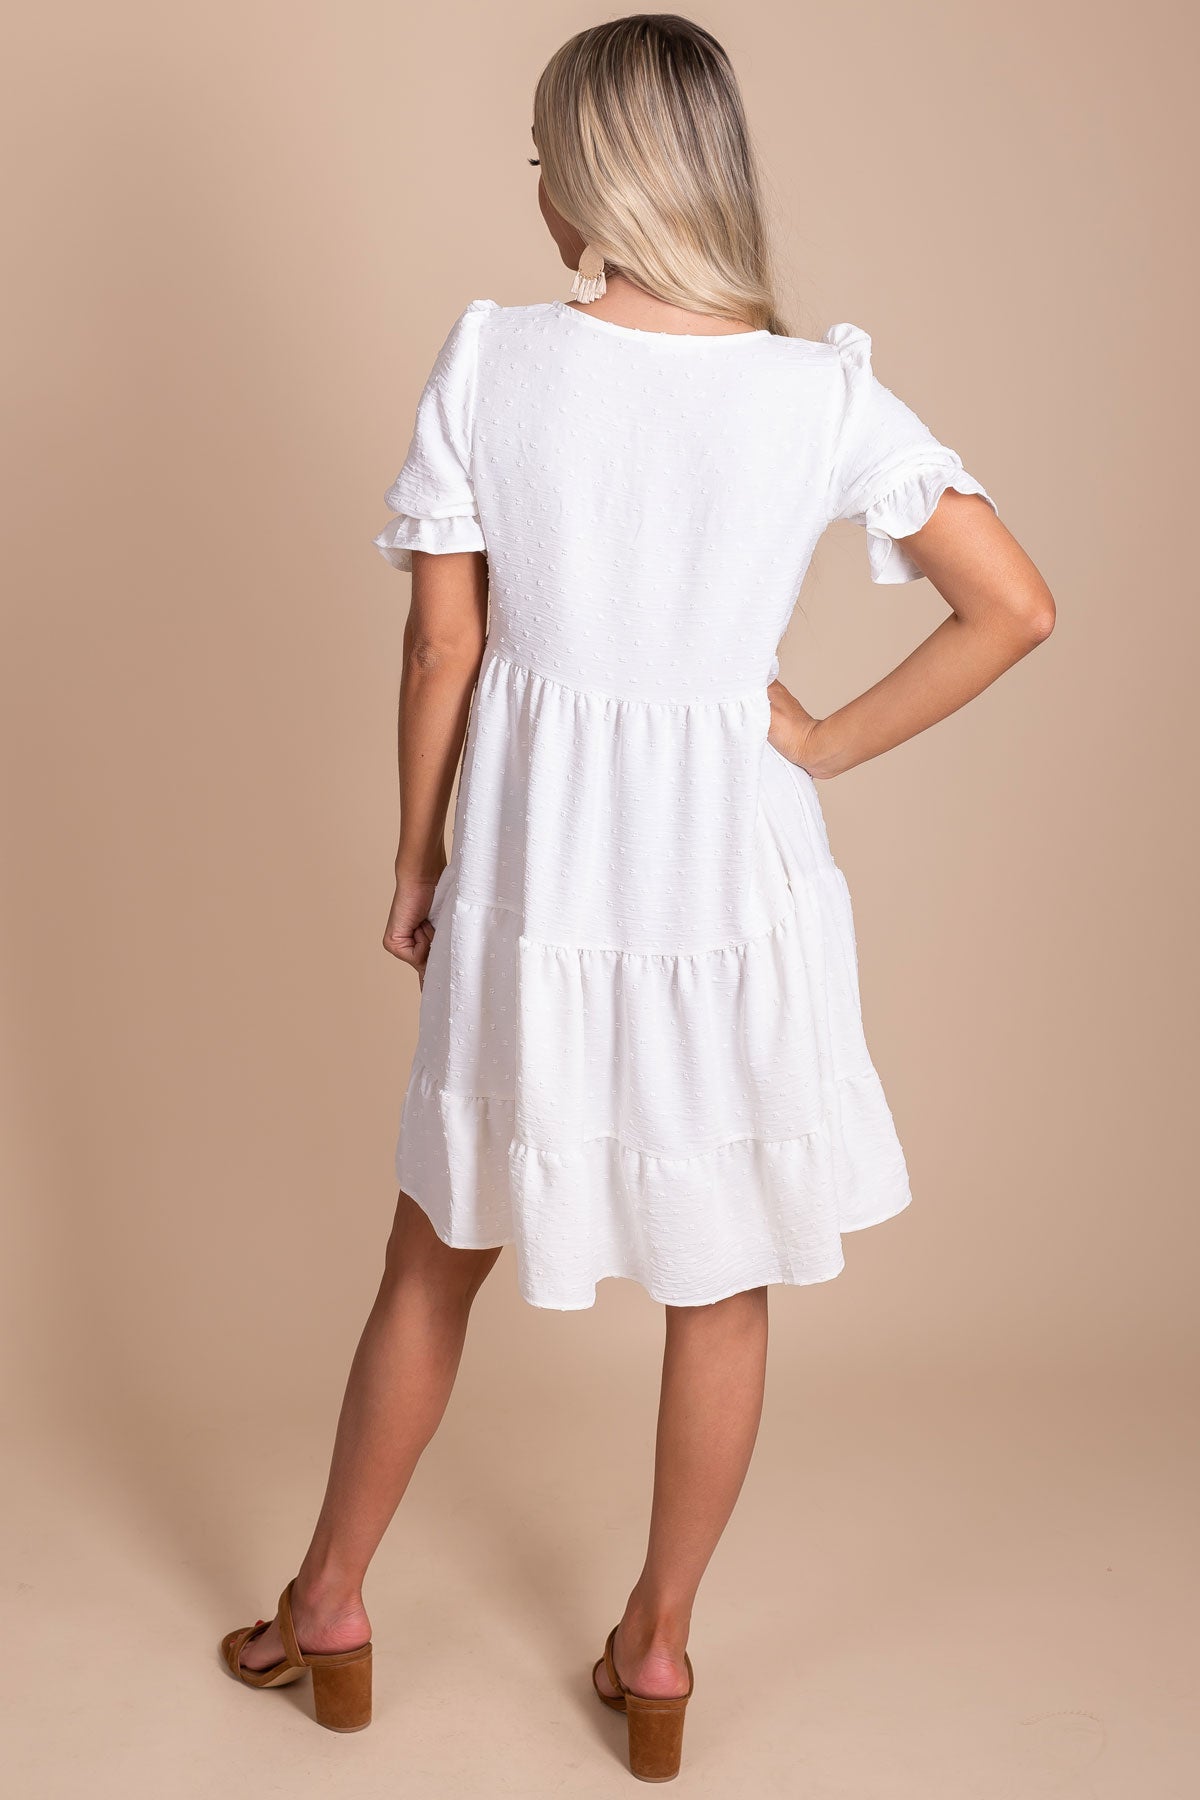 Women's Mini Length White Textured Dress